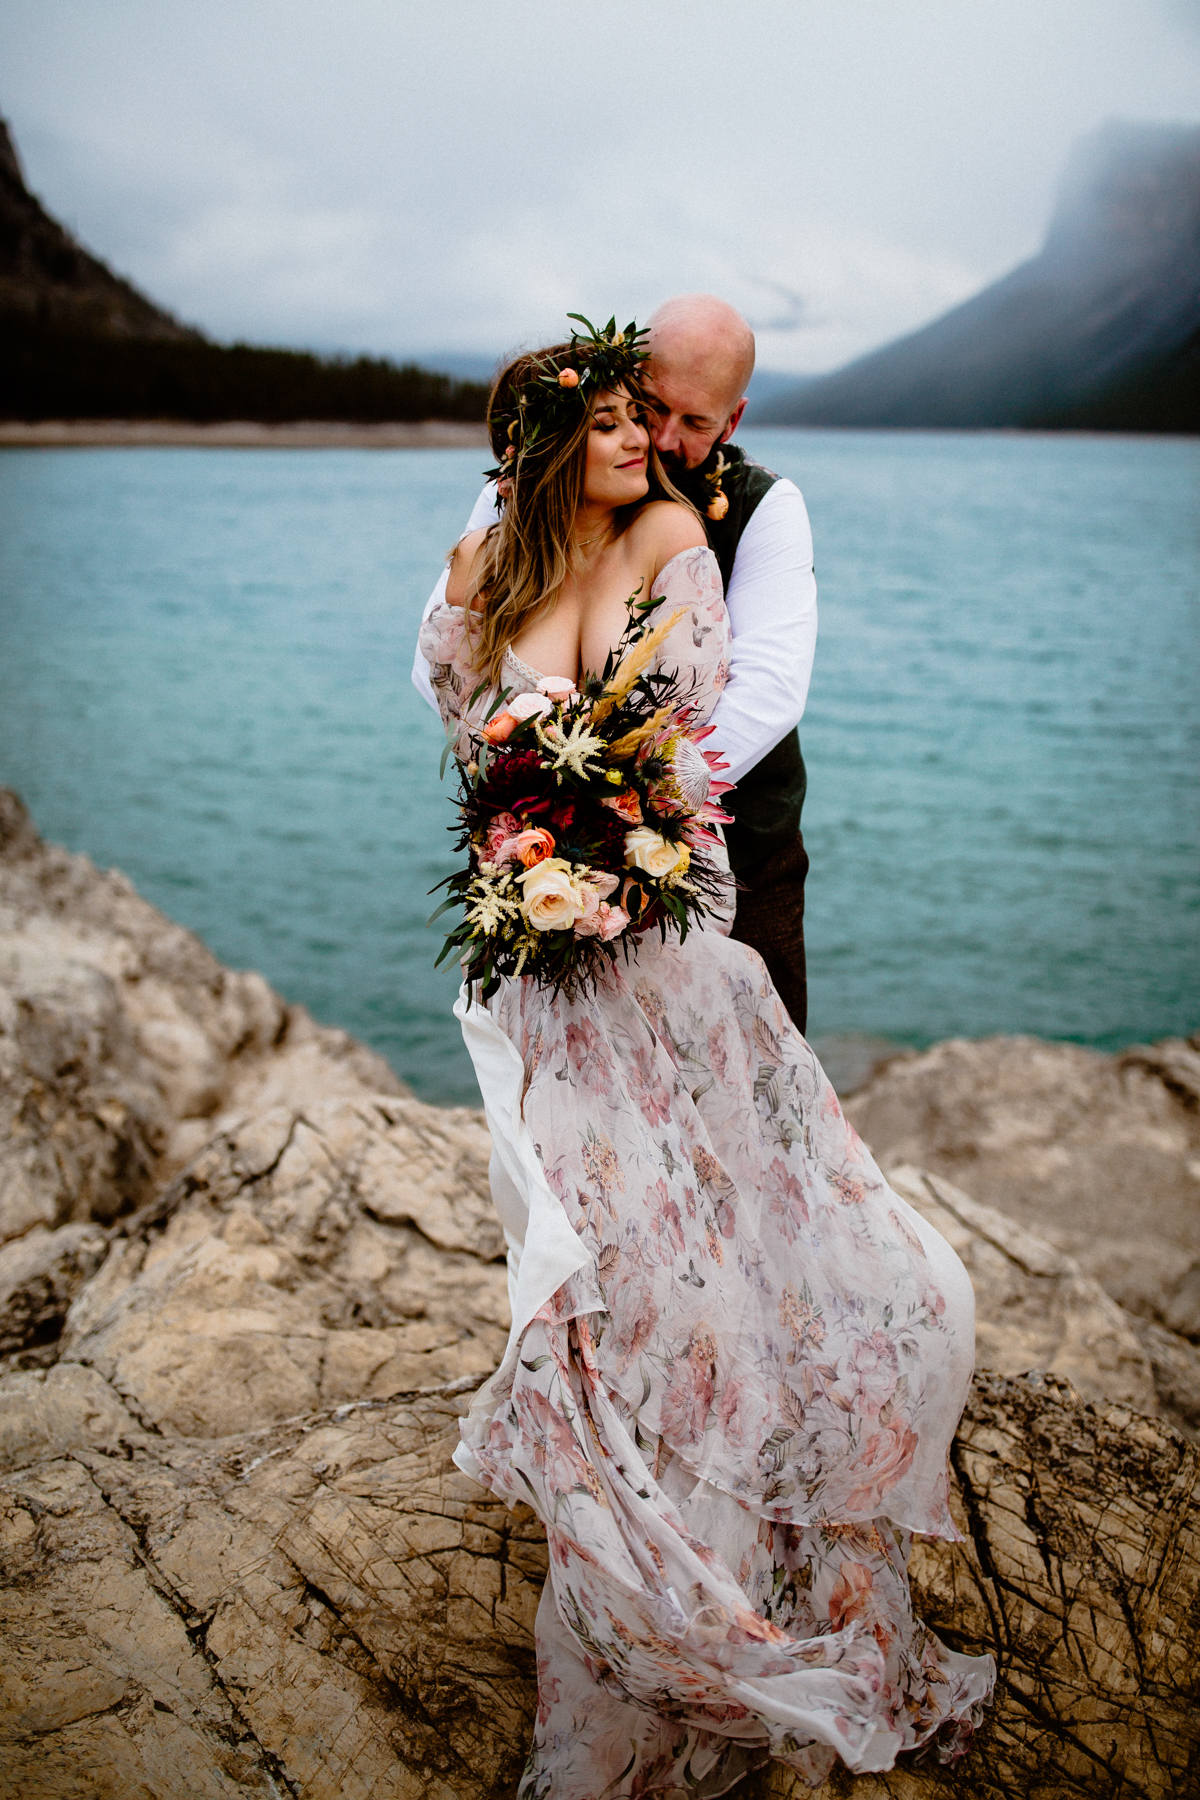 Stormy and Rainy Banff Wedding Photography - Photo 41